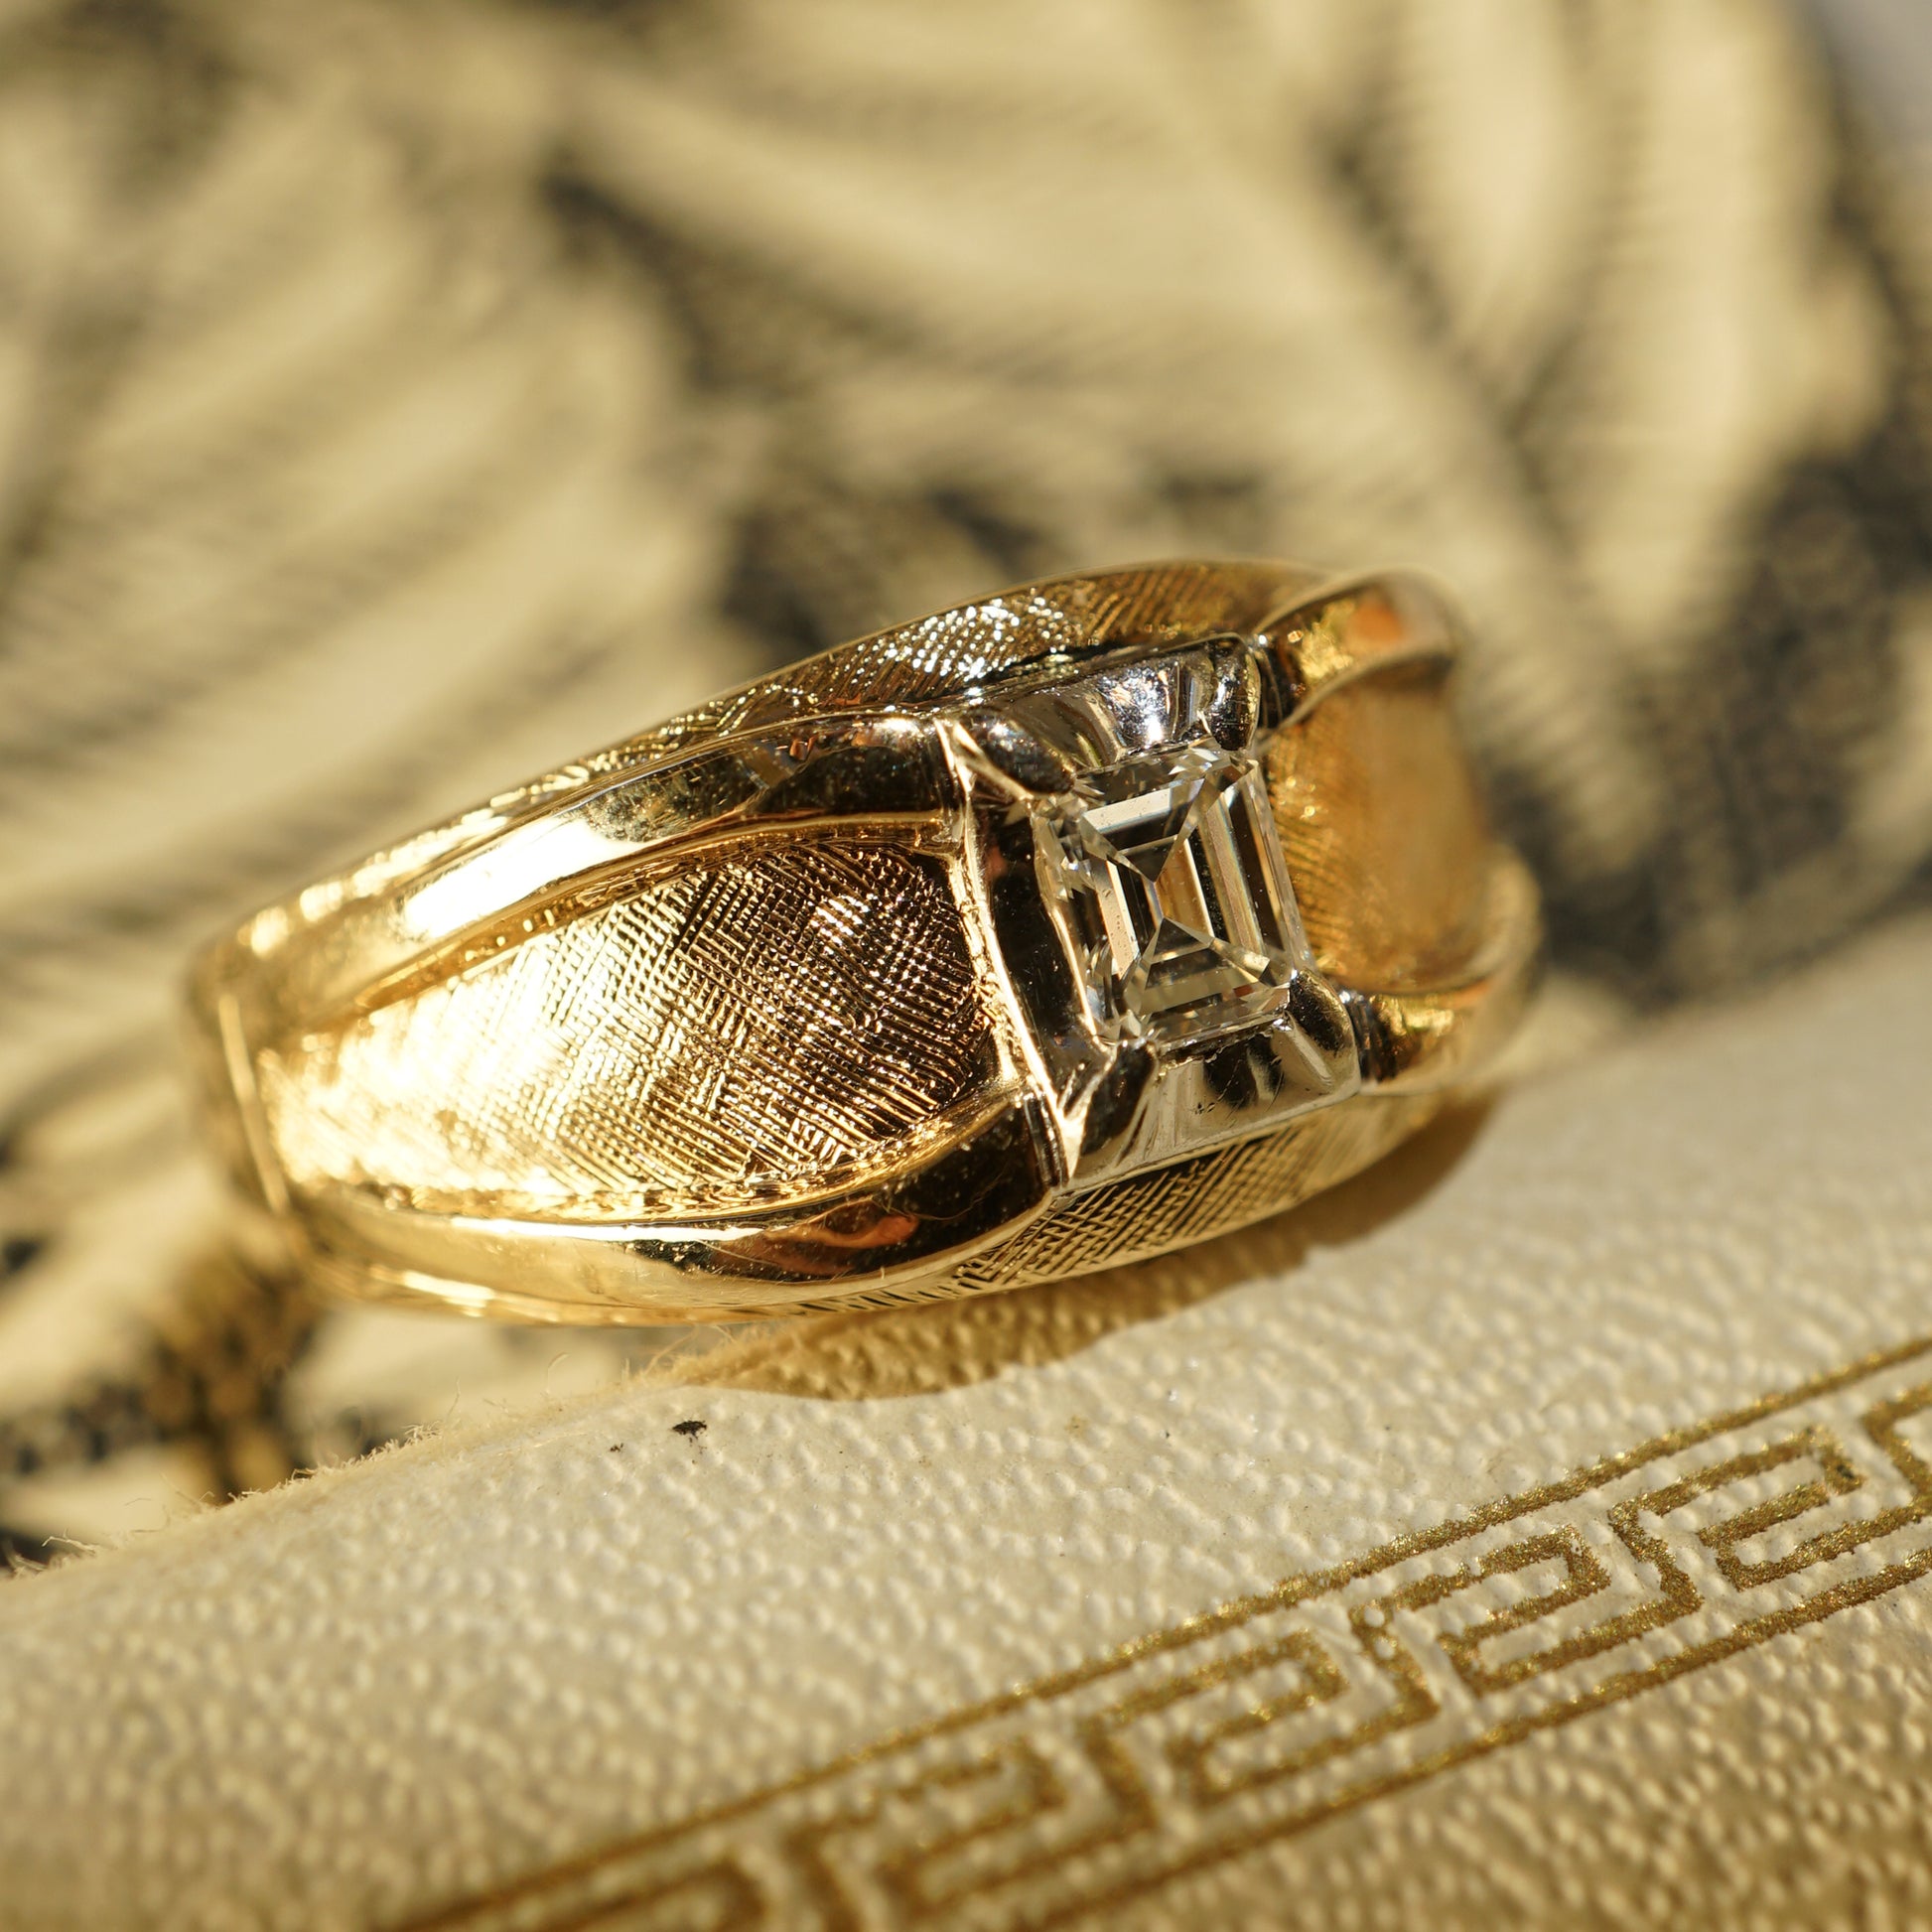 .24 Mid-Century Emerald Cut Diamond Ring in 14k Yellow GoldaComposition: 14 Karat White Gold/14 Karat Yellow Gold Ring Size: 7.5 Total Diamond Weight: .24ct Total Gram Weight: 7.1 g Inscription: 14k, K.M.D. TO J.L.M. 9-9-61
      